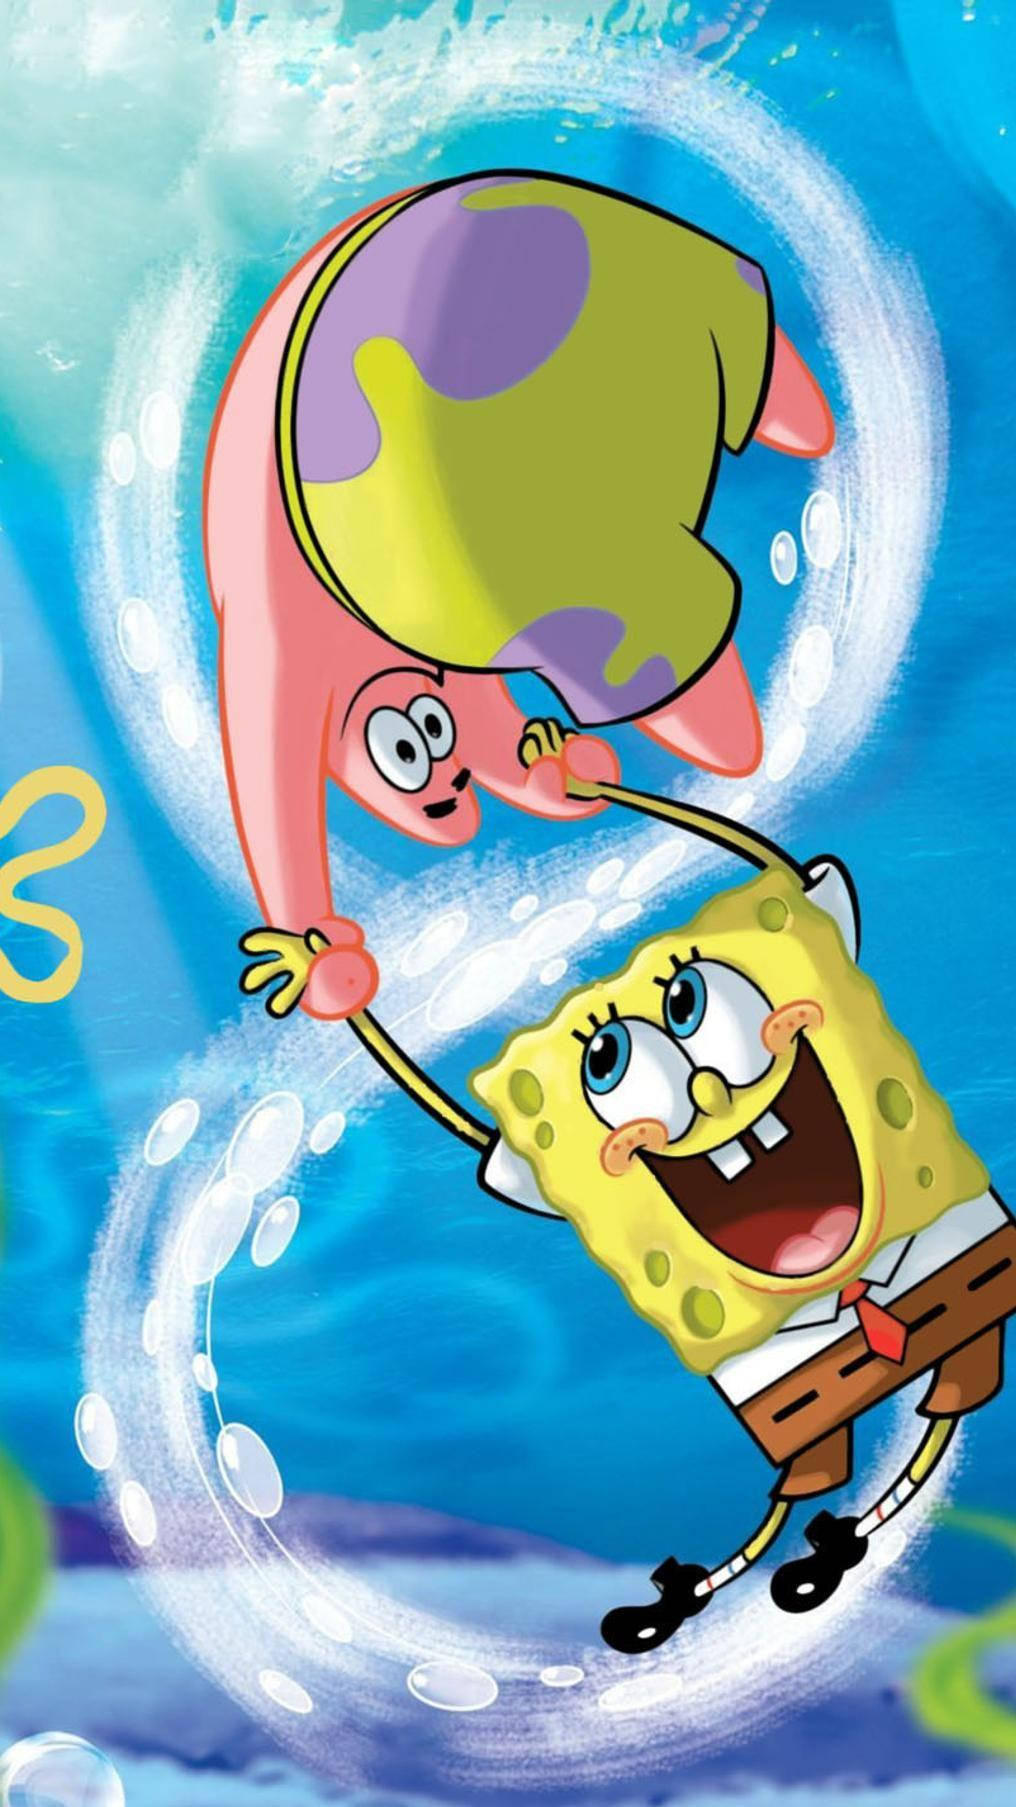 Spongebob And Patrick In The Air